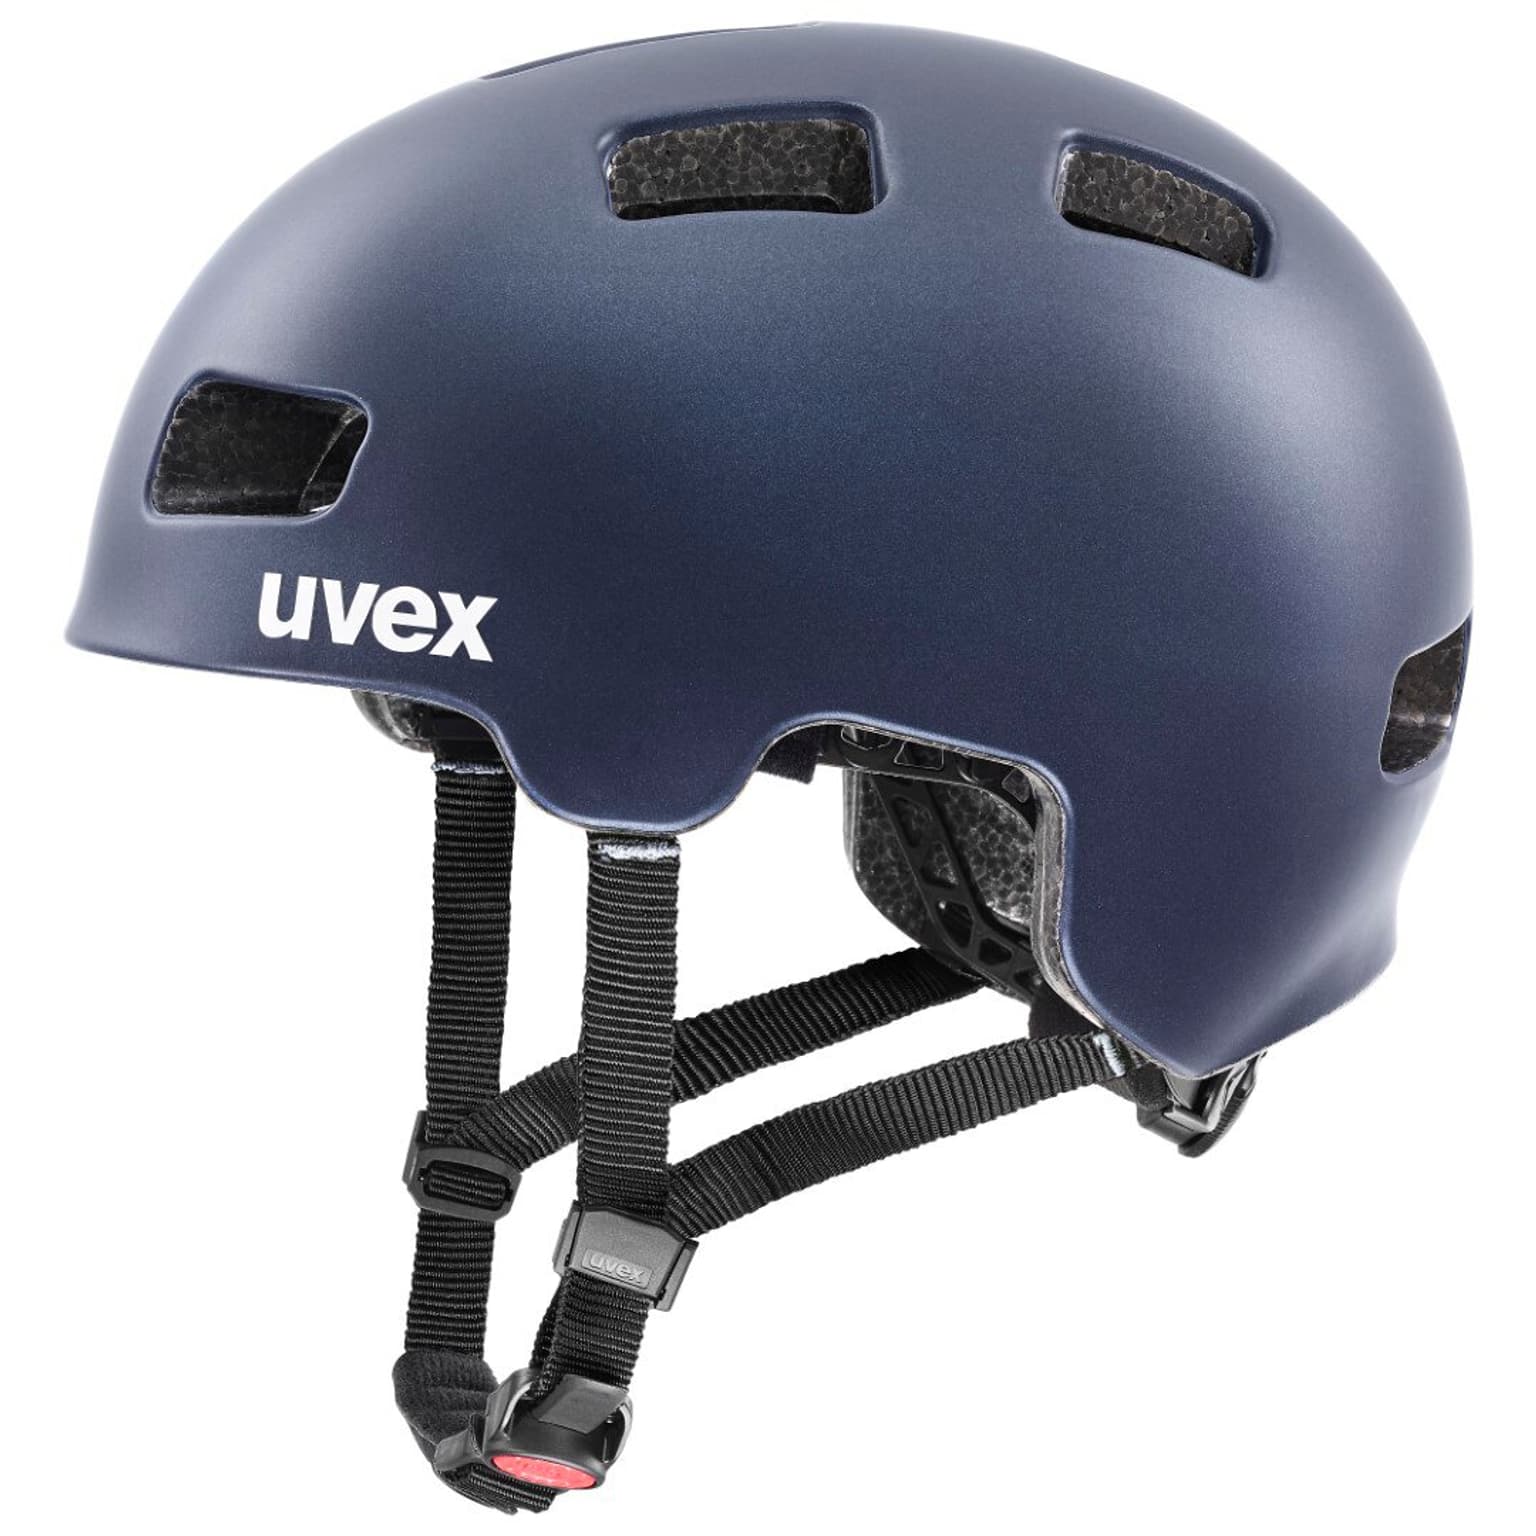 Uvex Uvex hlmt 4 cc Velohelm dunkelblau 1